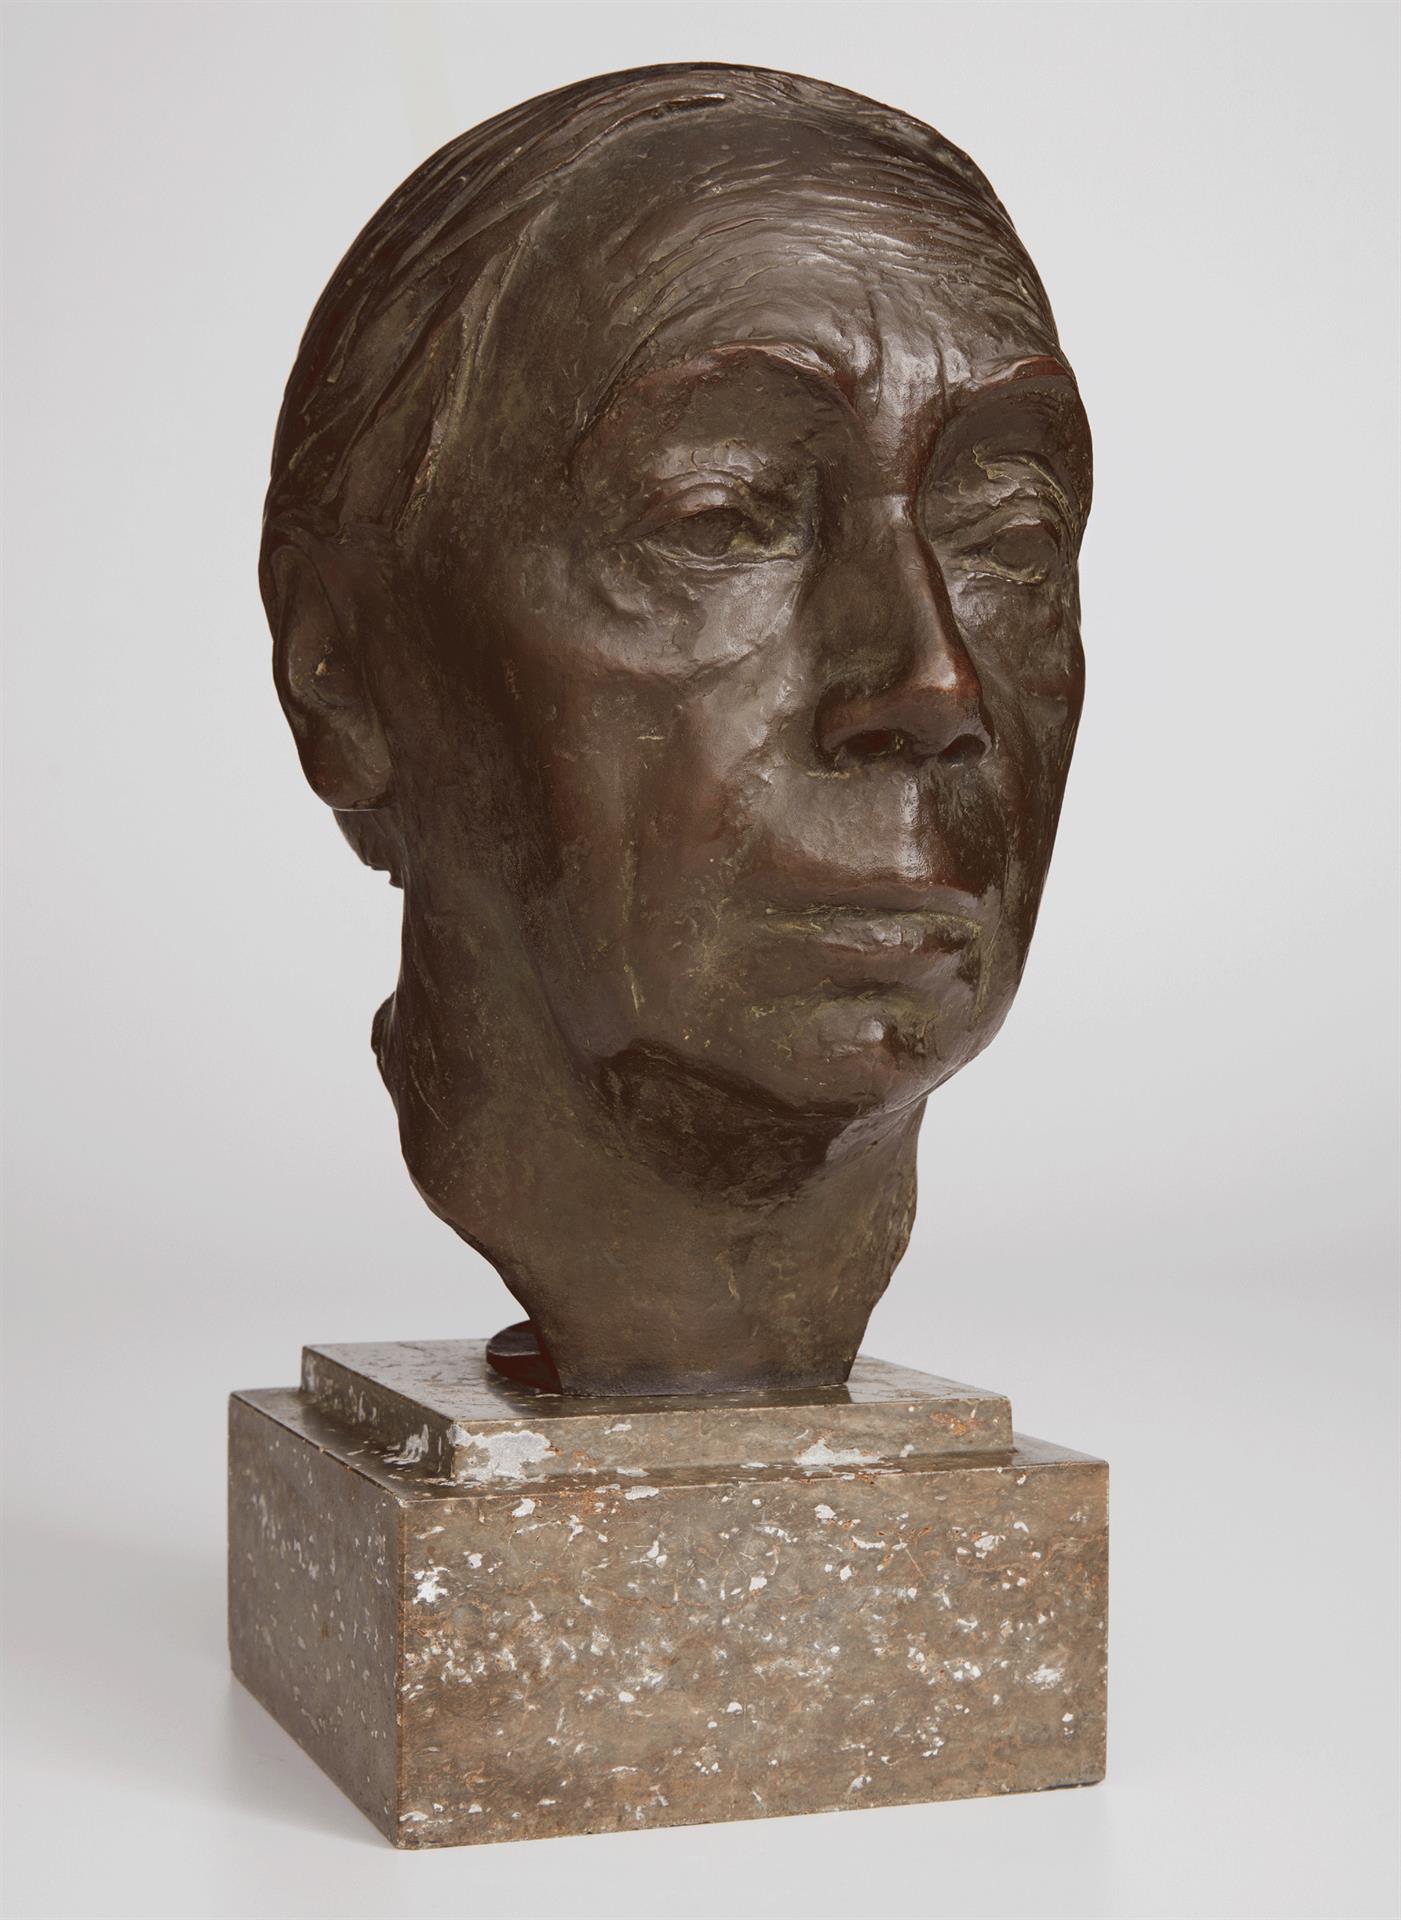 Käthe Kollwitz, Autoportrait, 1926-36, bronze, Seeler 26 I.B.3, Collection Kollwitz de Cologne © Käthe Kollwitz Museum Köln 